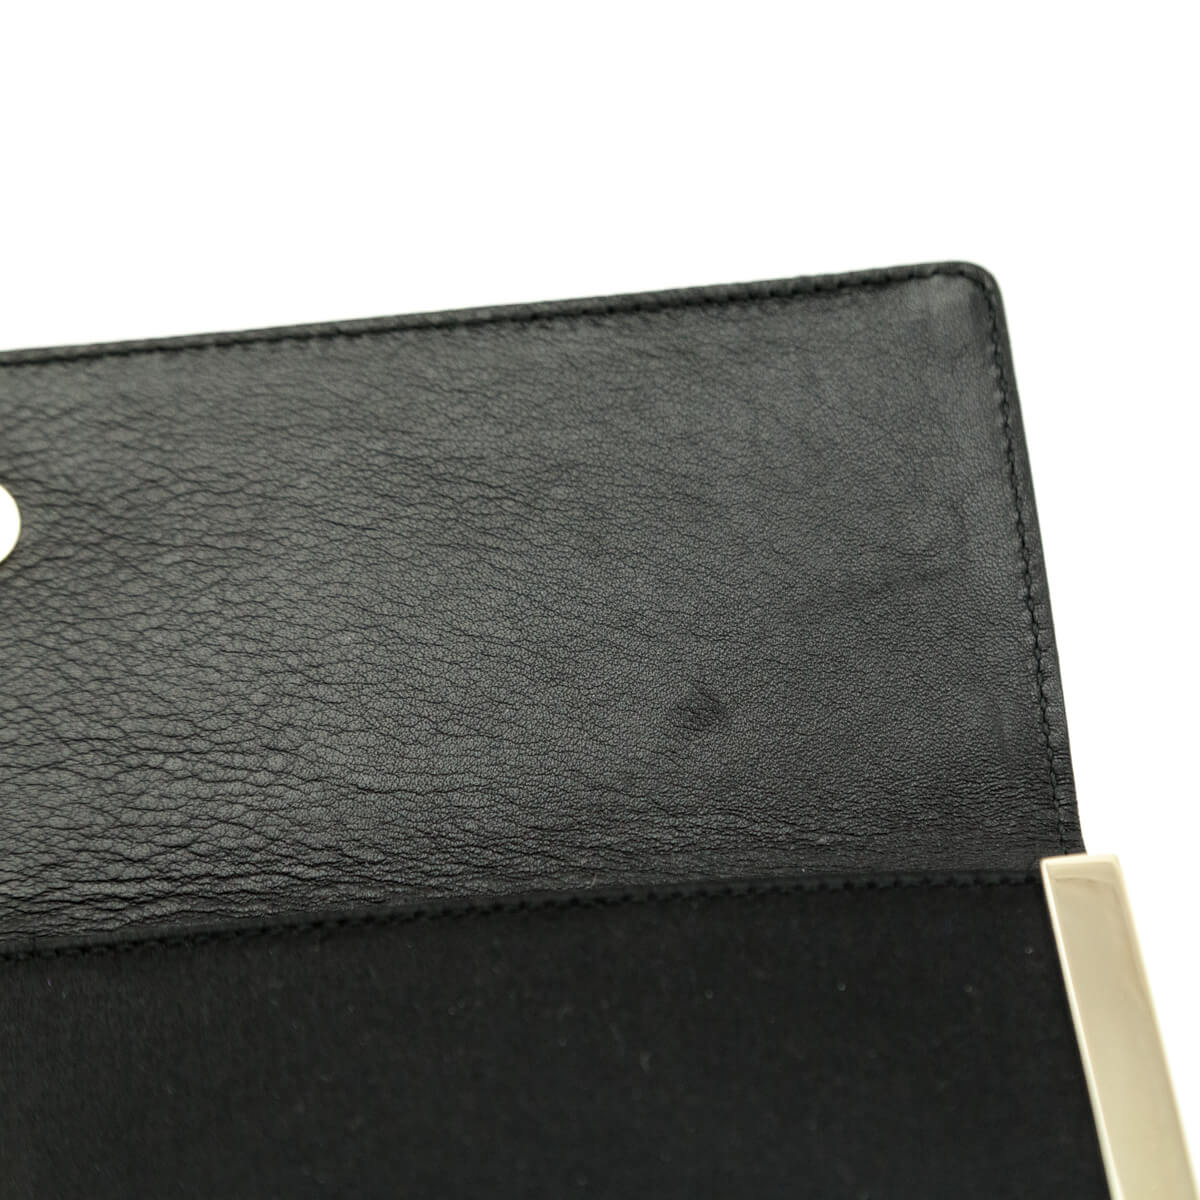 Gucci Black Satin Signature Clutch - Preowned Gucci Handbags Canada